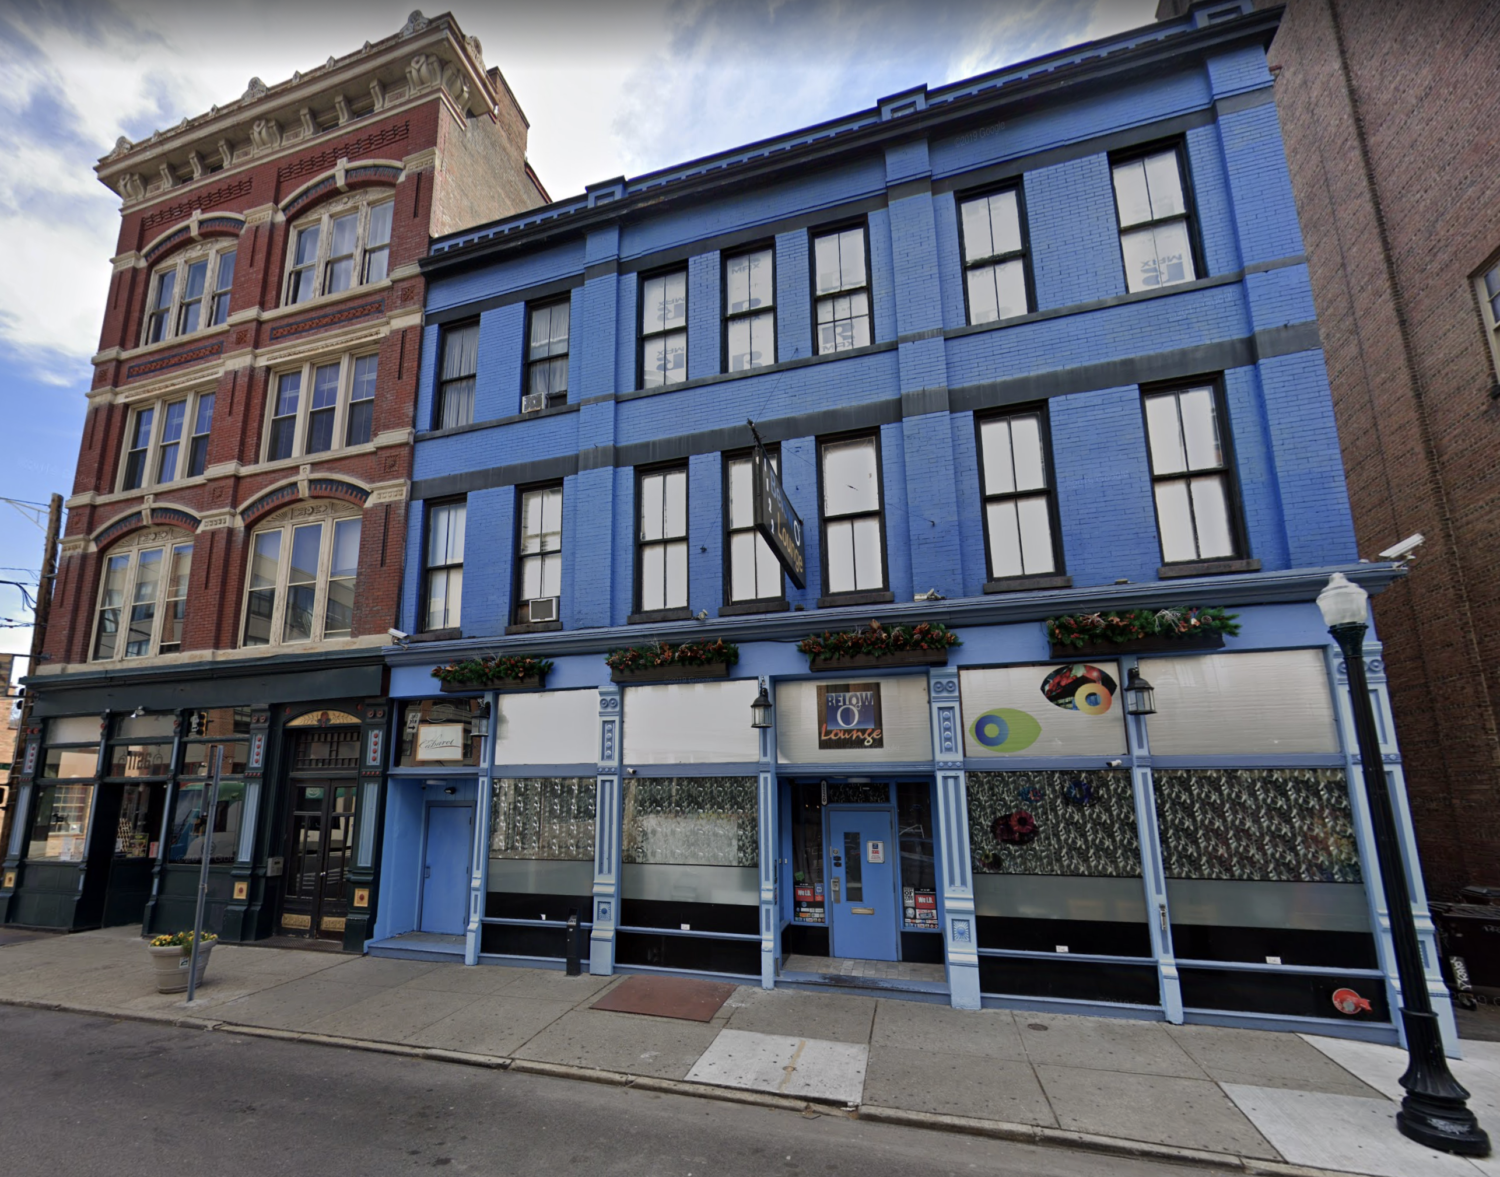 April 2019 Google Street View of the Cabaret and Below Zero Lounge in Cincinnati, Ohio.